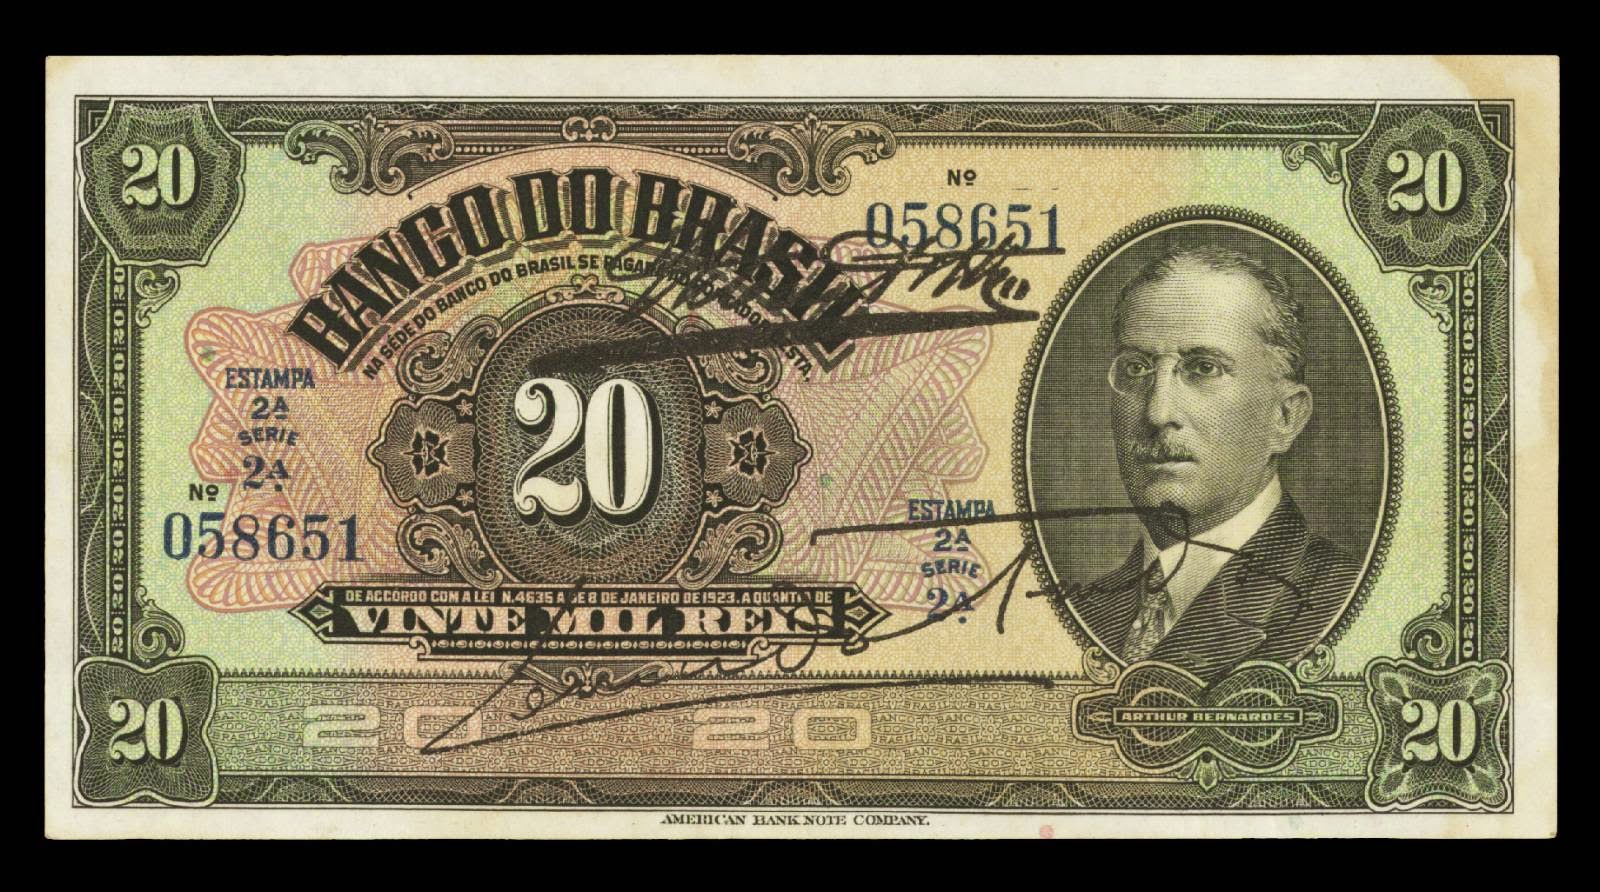 Brazil currency Paper Money 20 Mil Reis banknote bill